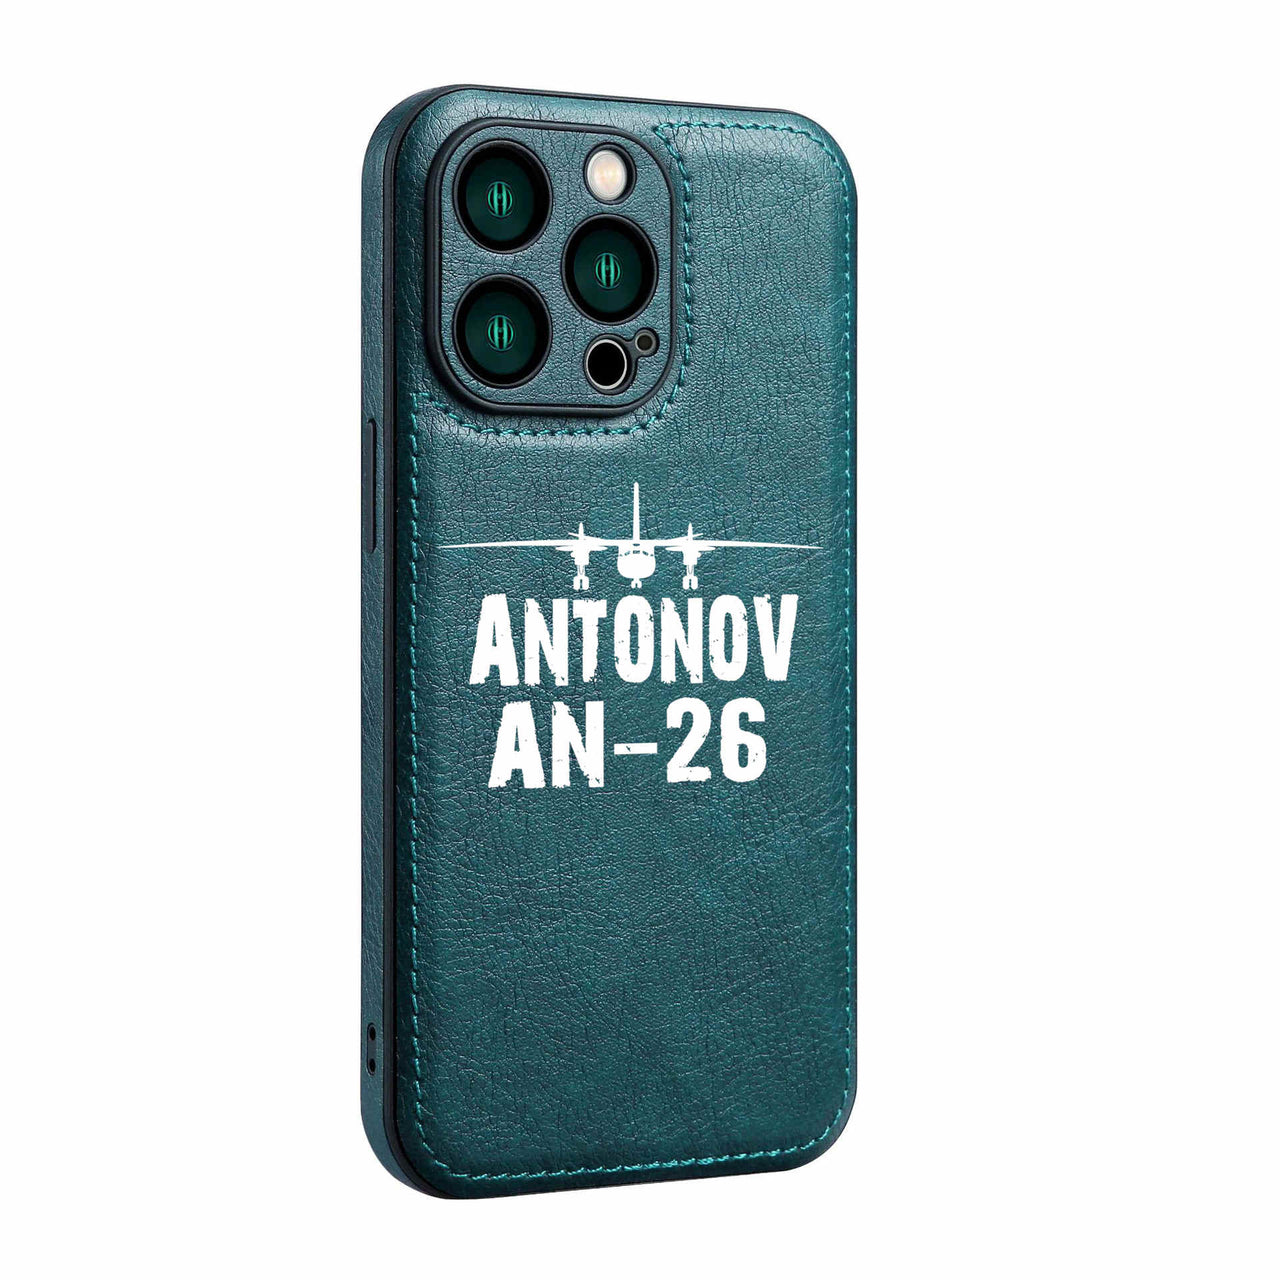 Antonov AN-26 & Plane Designed Leather iPhone Cases